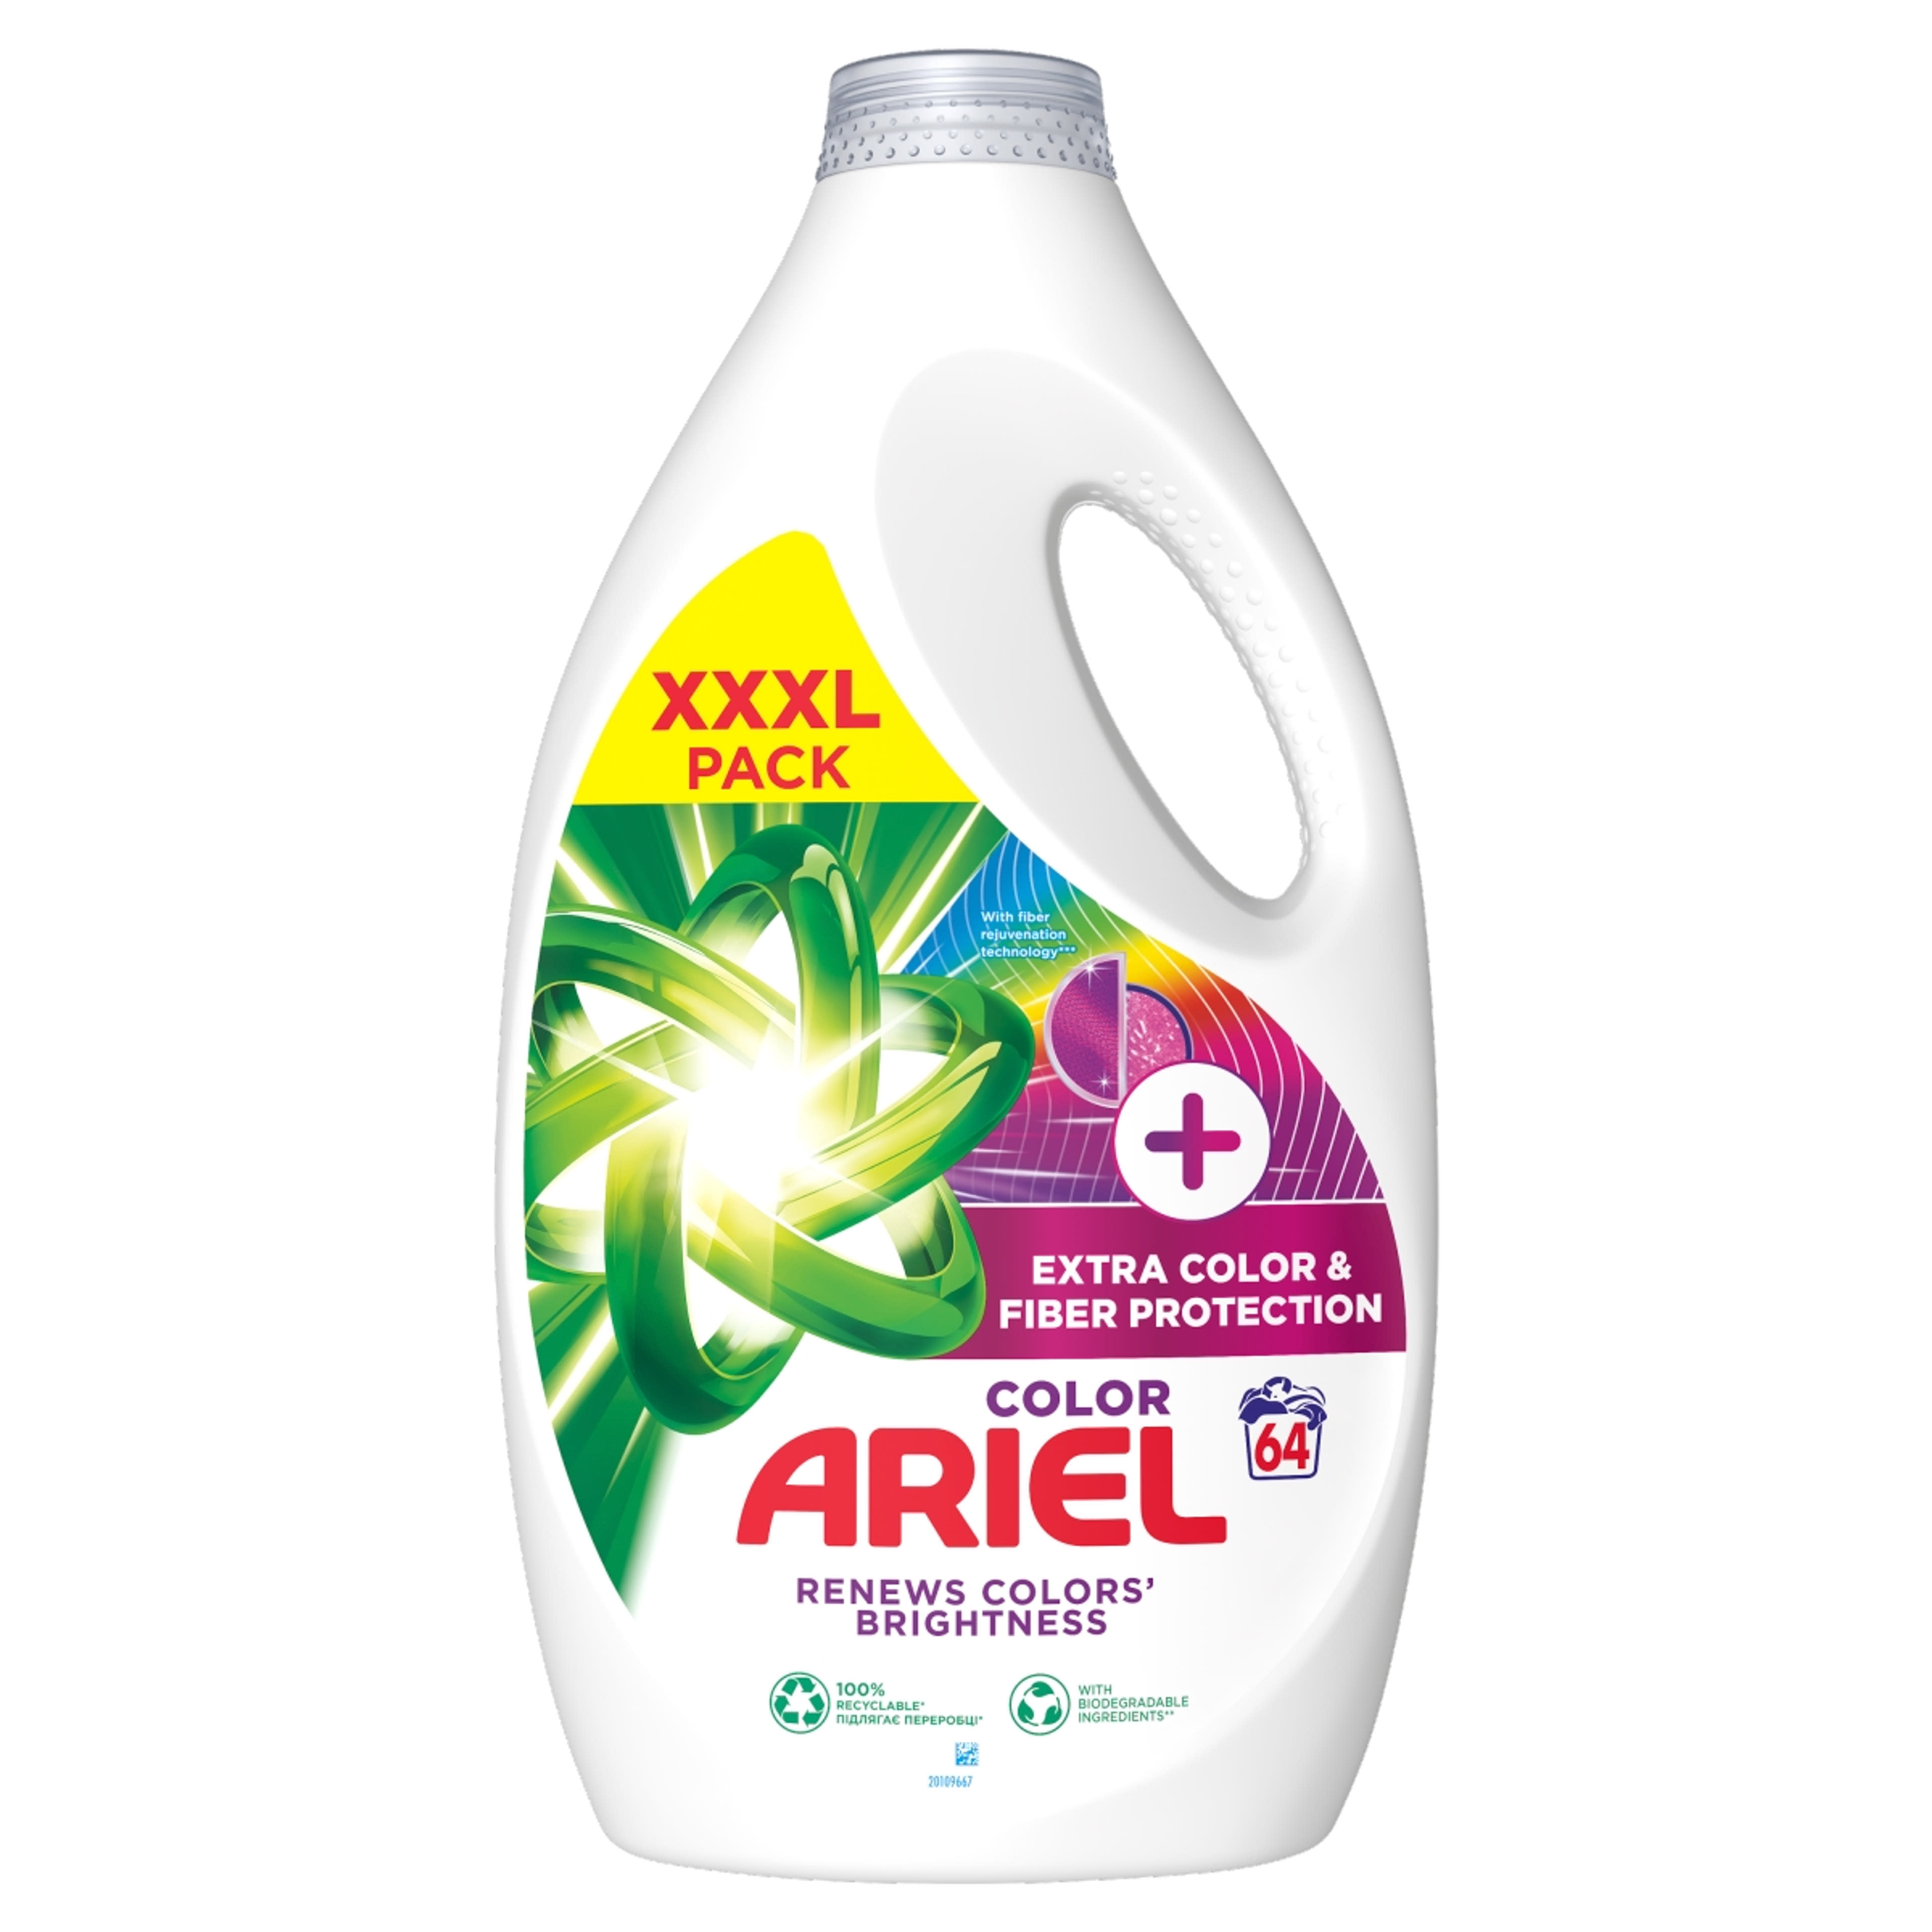 Ariel Complete Fiber Protection folyékony mosószer, 64 mosáshoz - 3200 ml-1